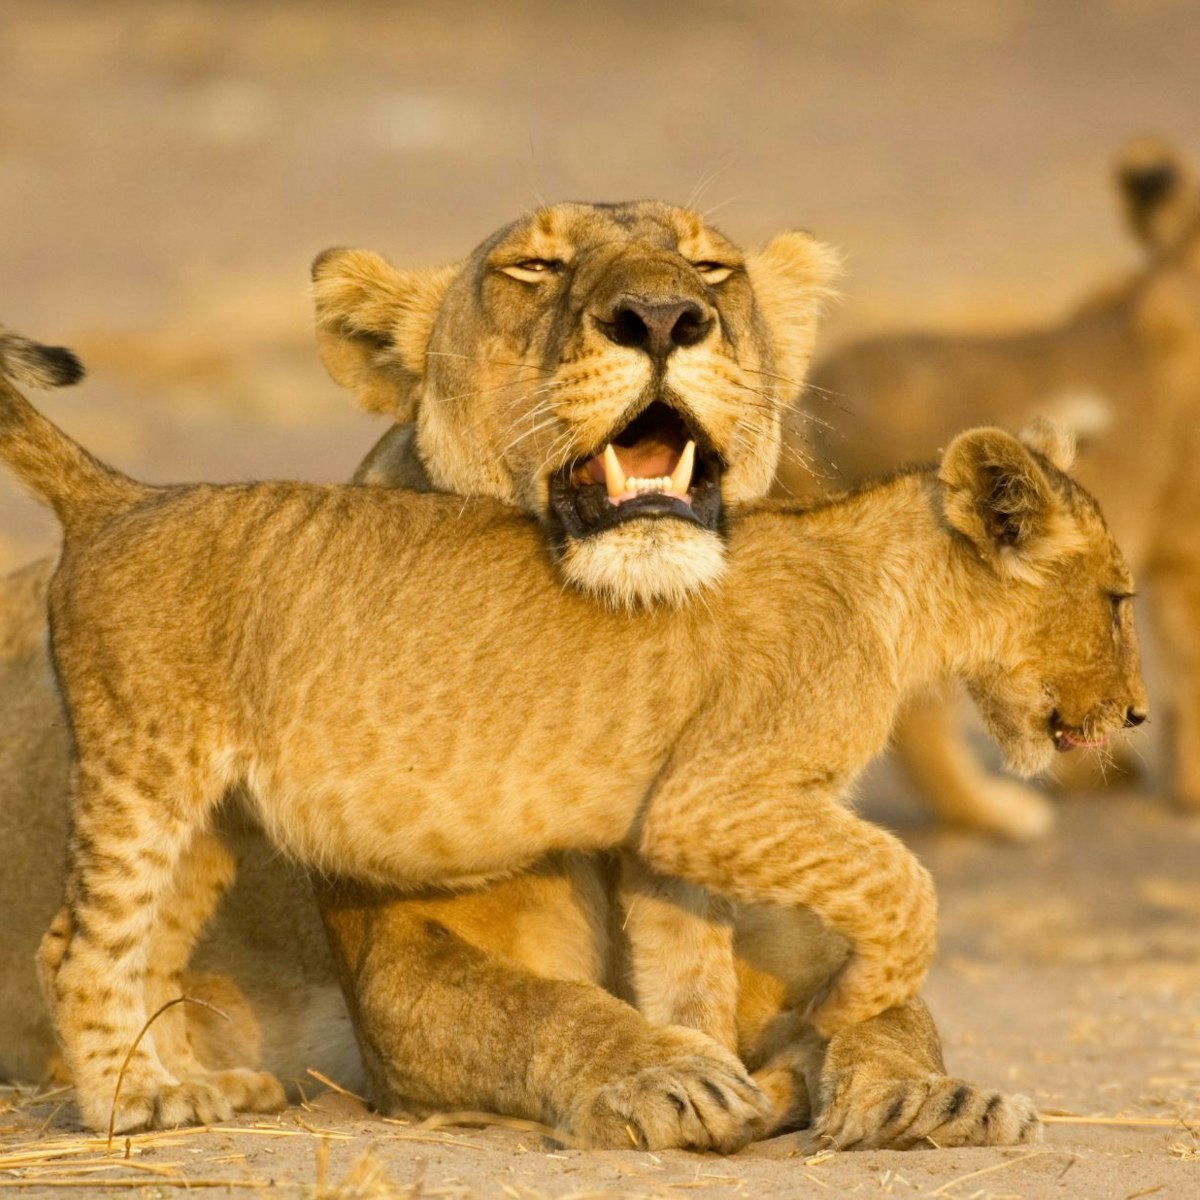 Katavi National Park, Tanzania
Lioness (Panthera leo) resting chin on cub's back - stock photo

